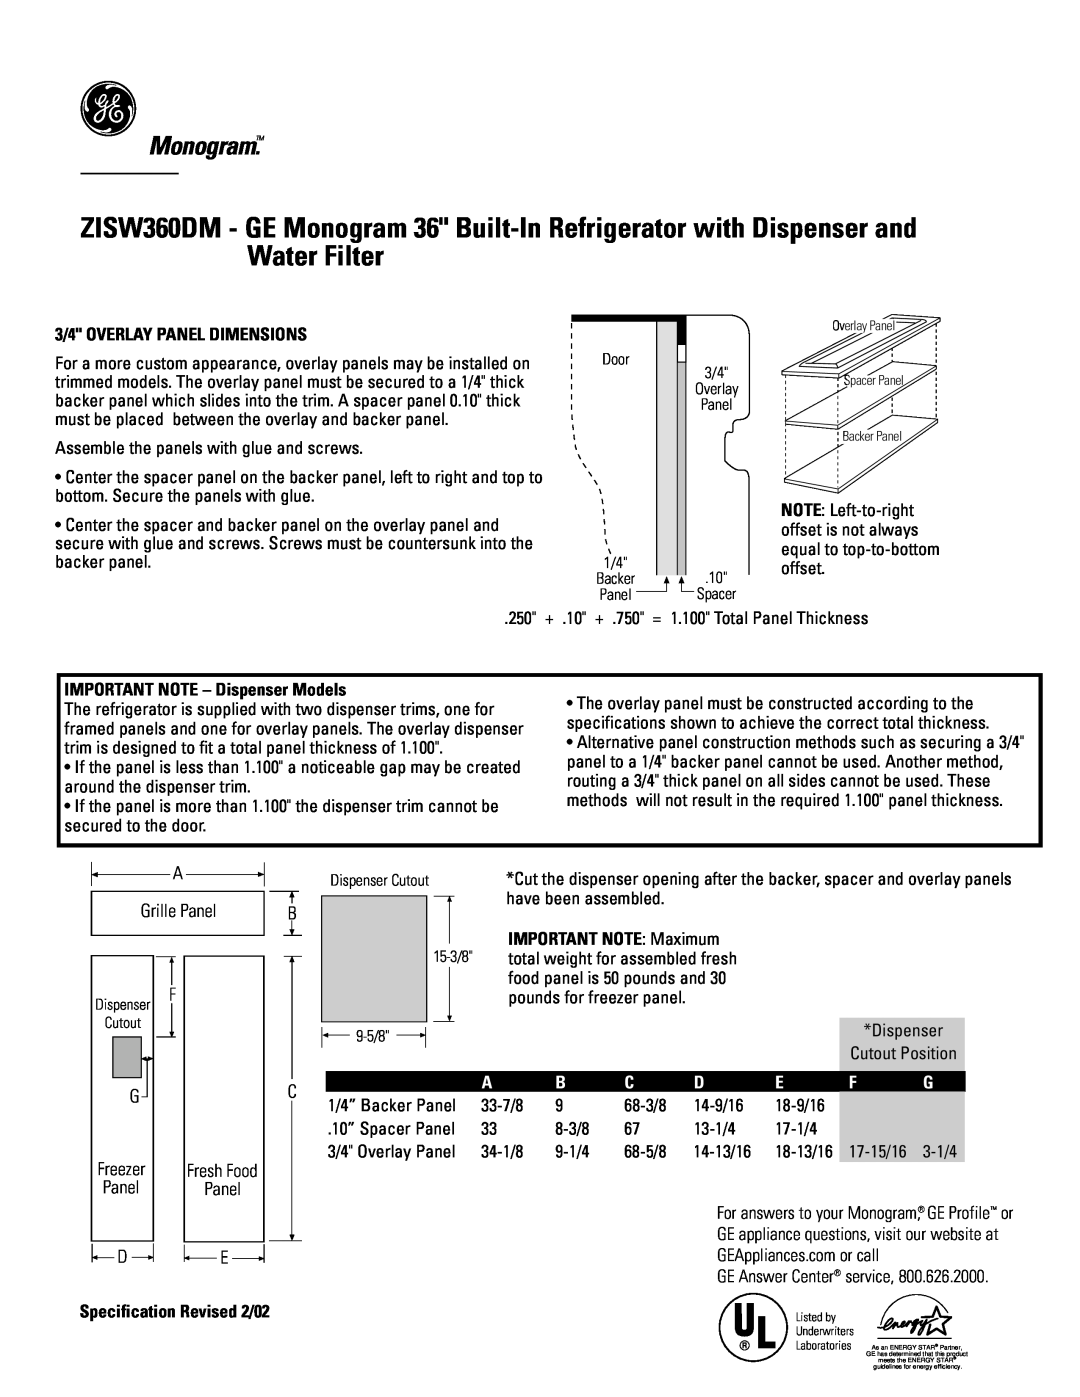 GE Monogram ZISW360DM Monogram, Grille Panel, G Freezer Panel, Fresh Food Panel, 3/4 OVERLAY PANEL DIMENSIONS 